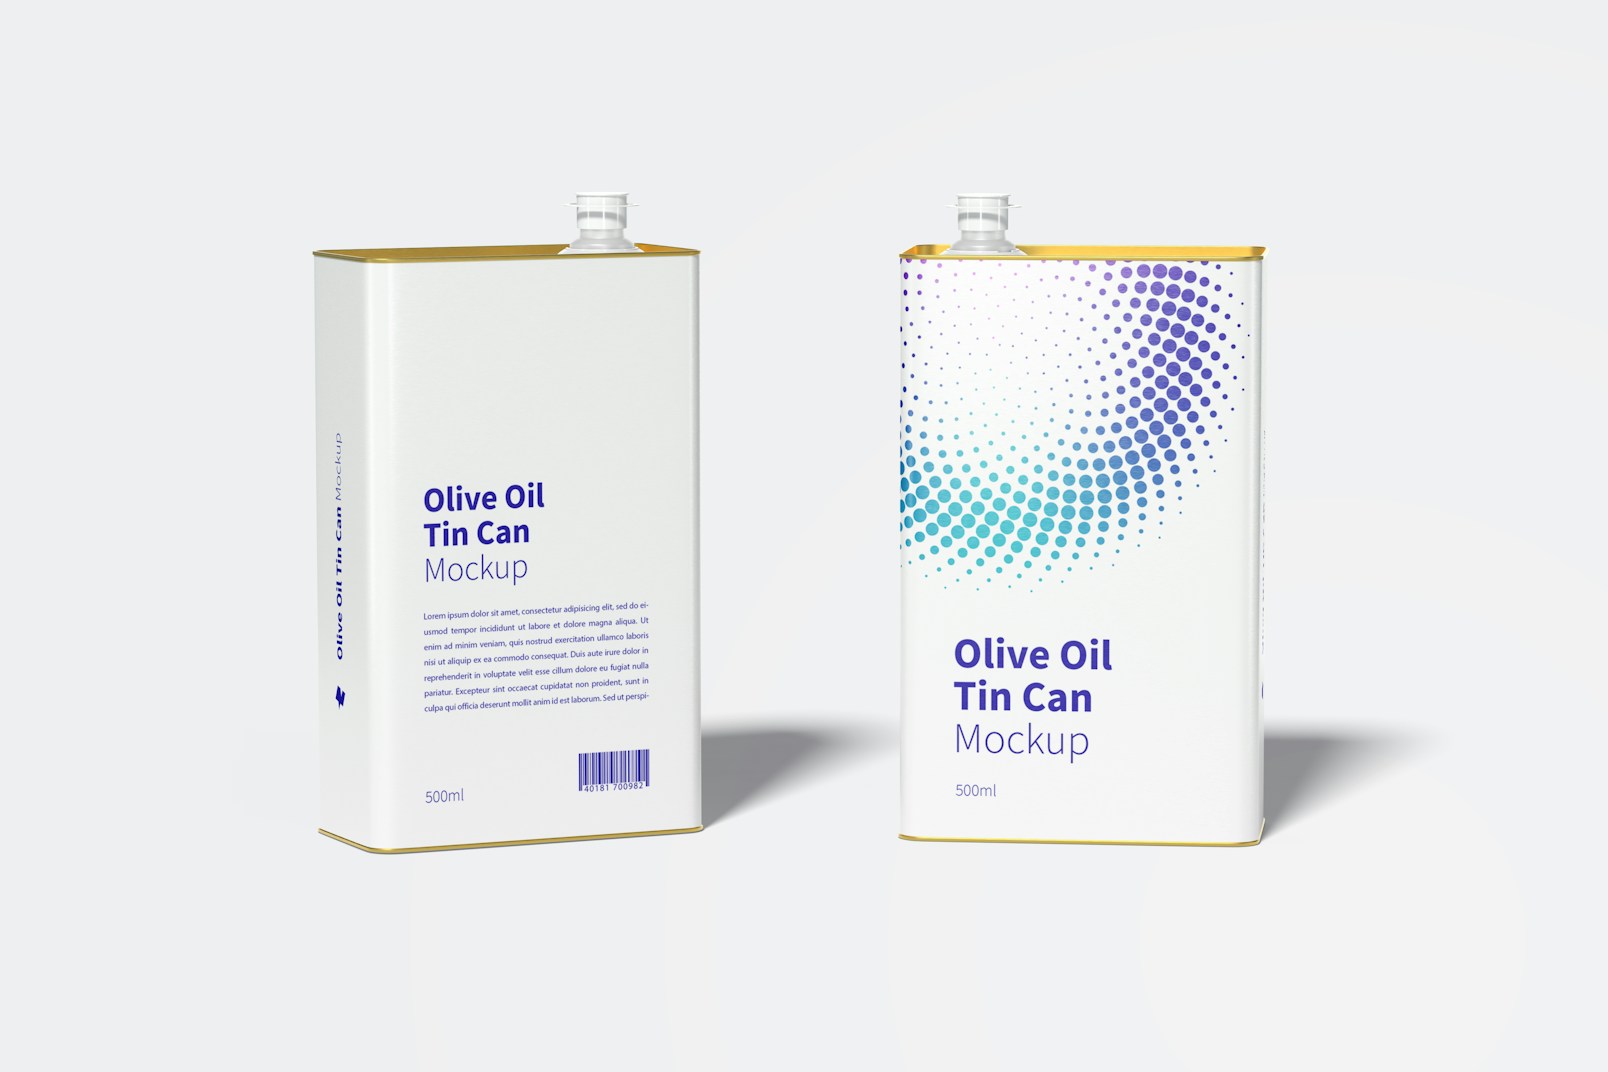 500ml Olive Oil Rectangular Tin Cans Mockup